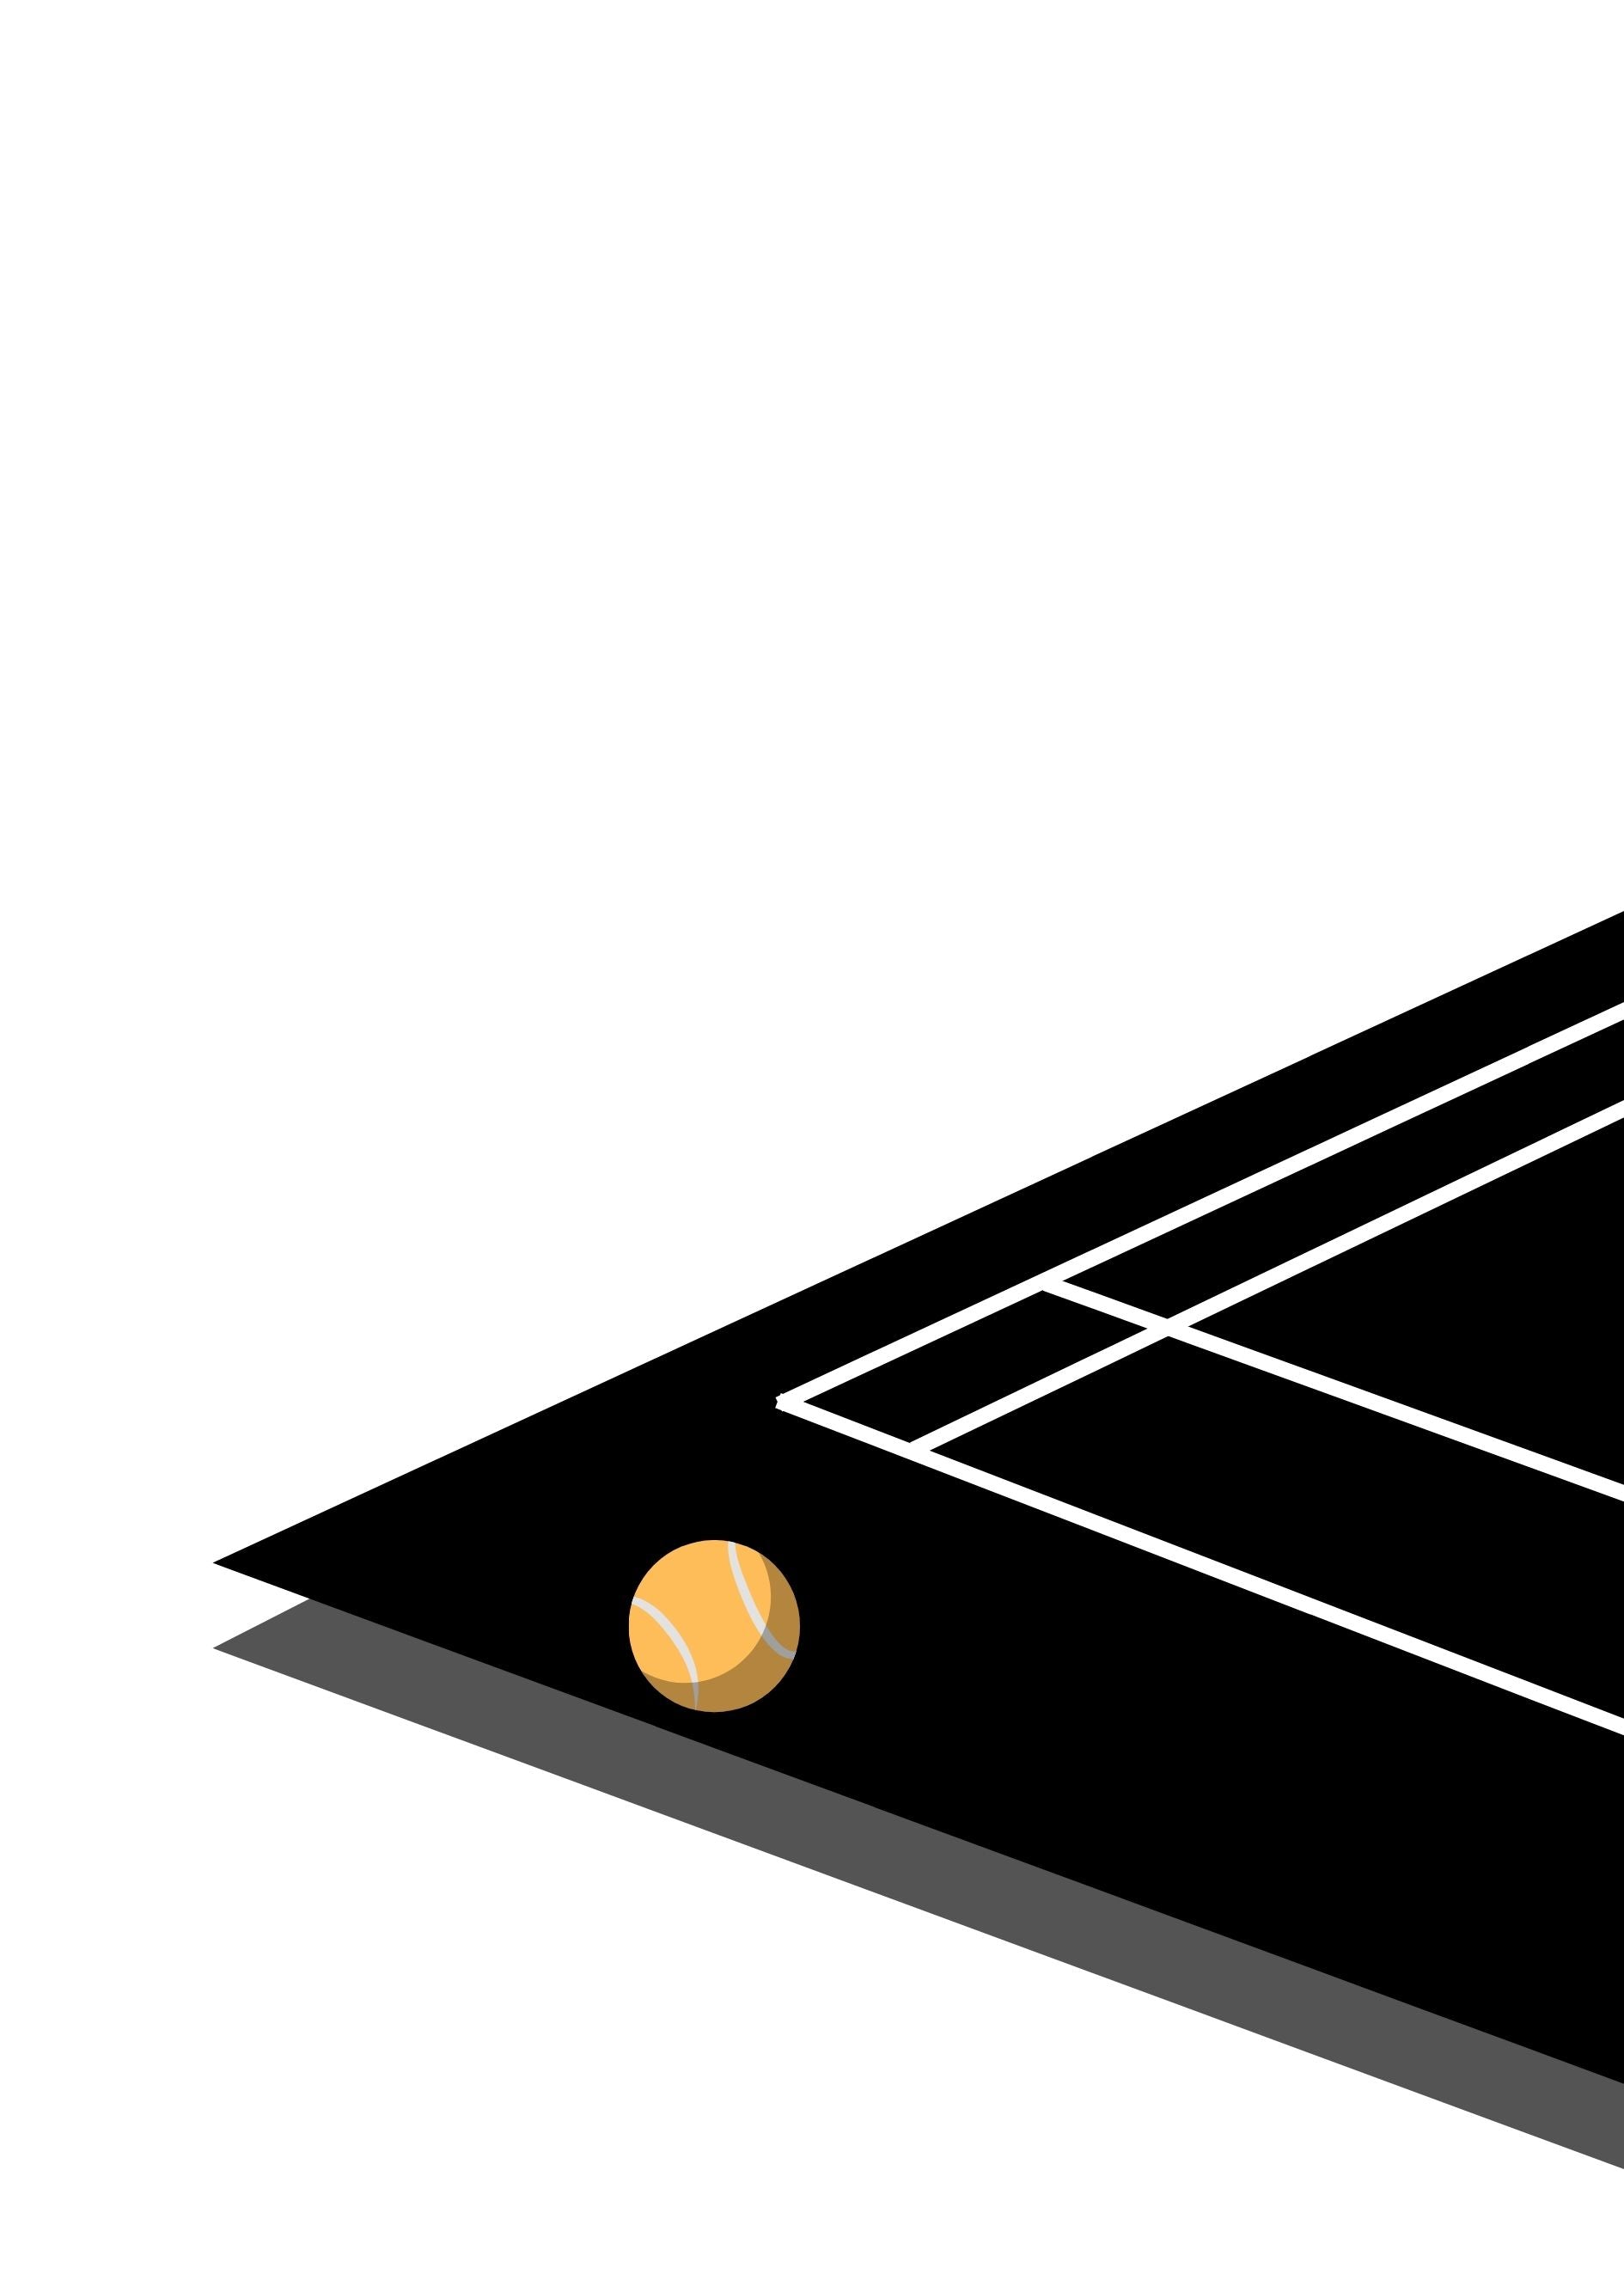 Tennis field black poster